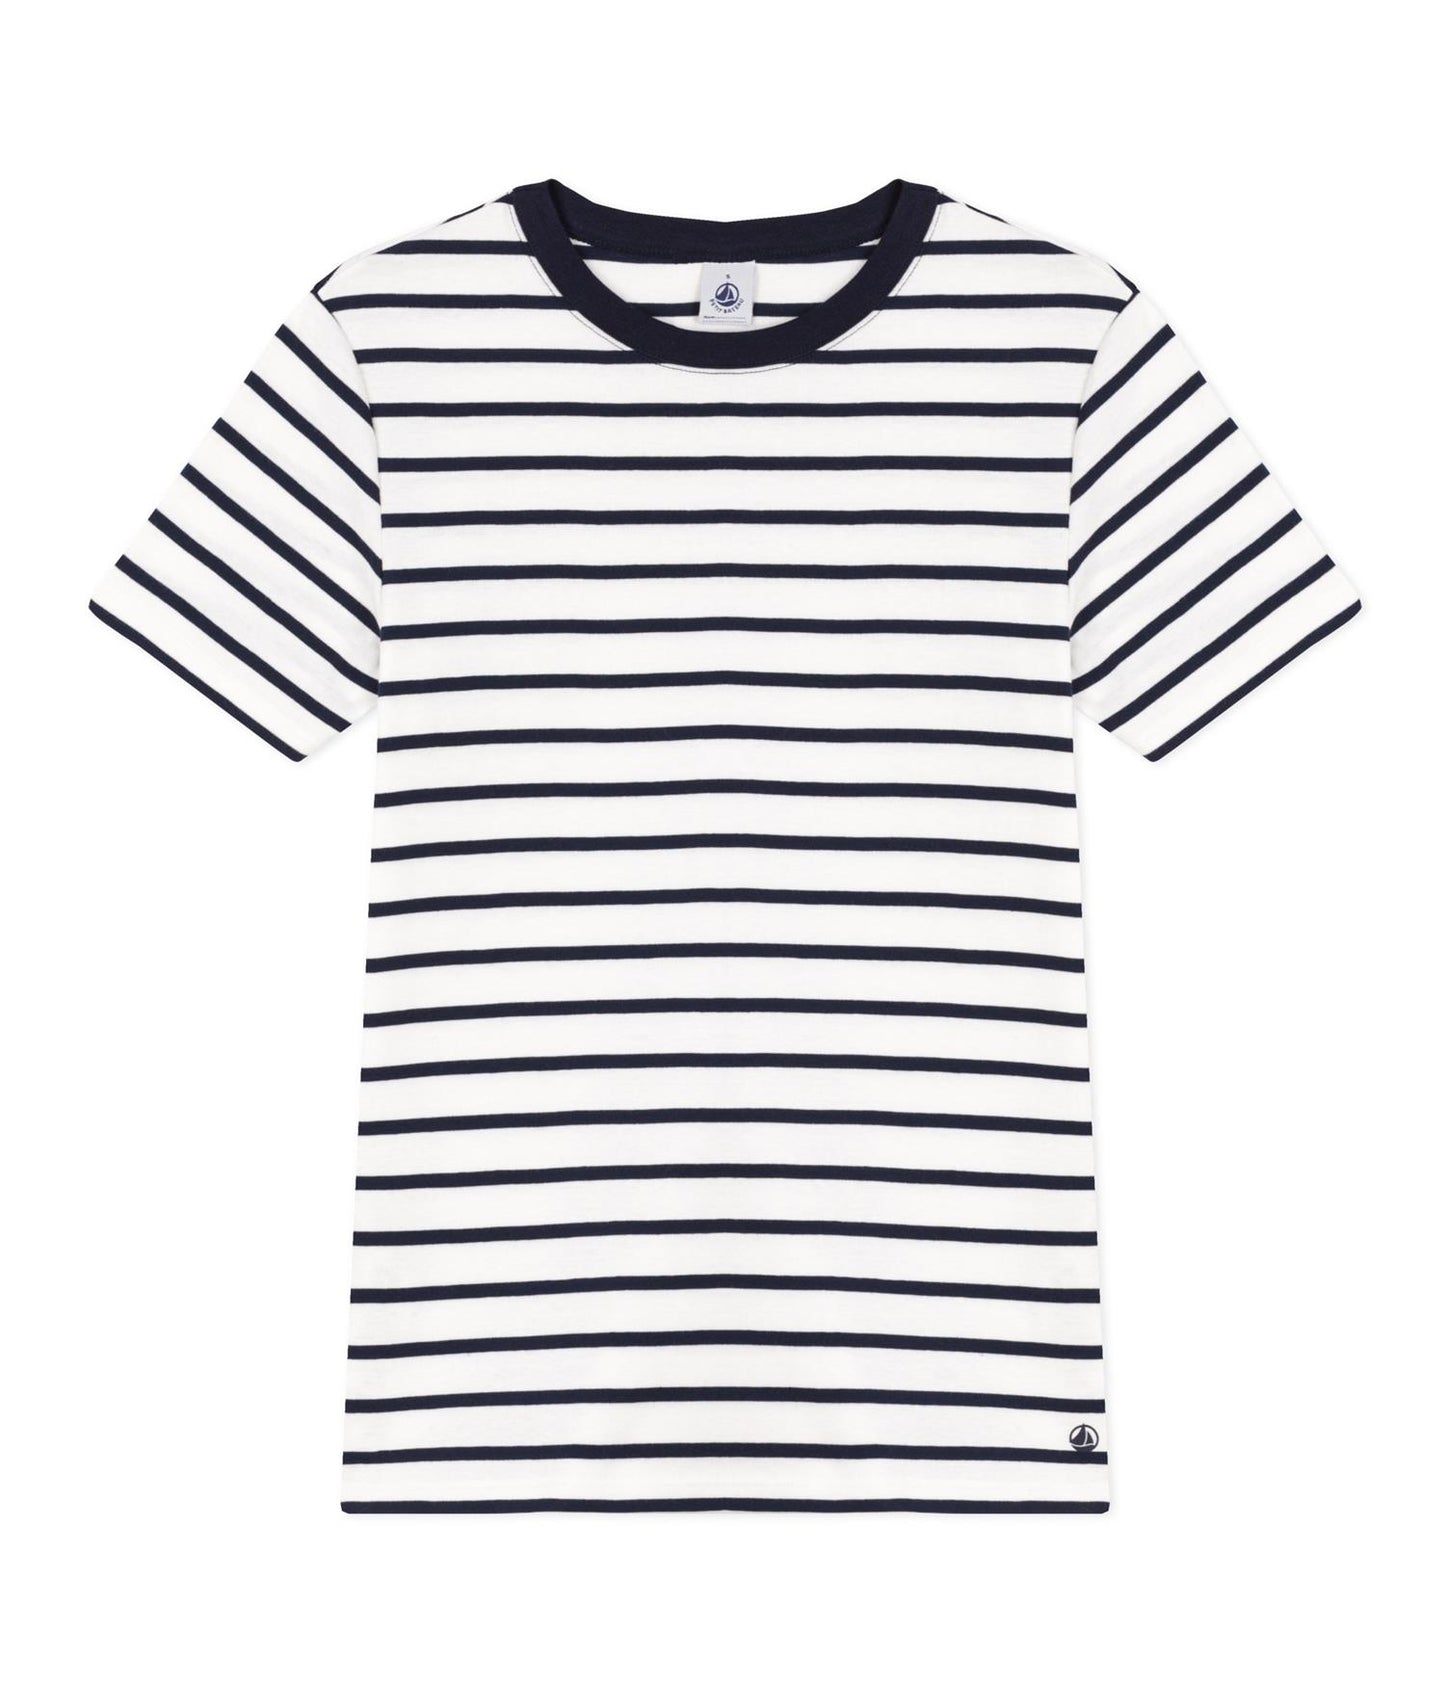 Tee-Shirt Round Neck MC - Stripe Navy / White